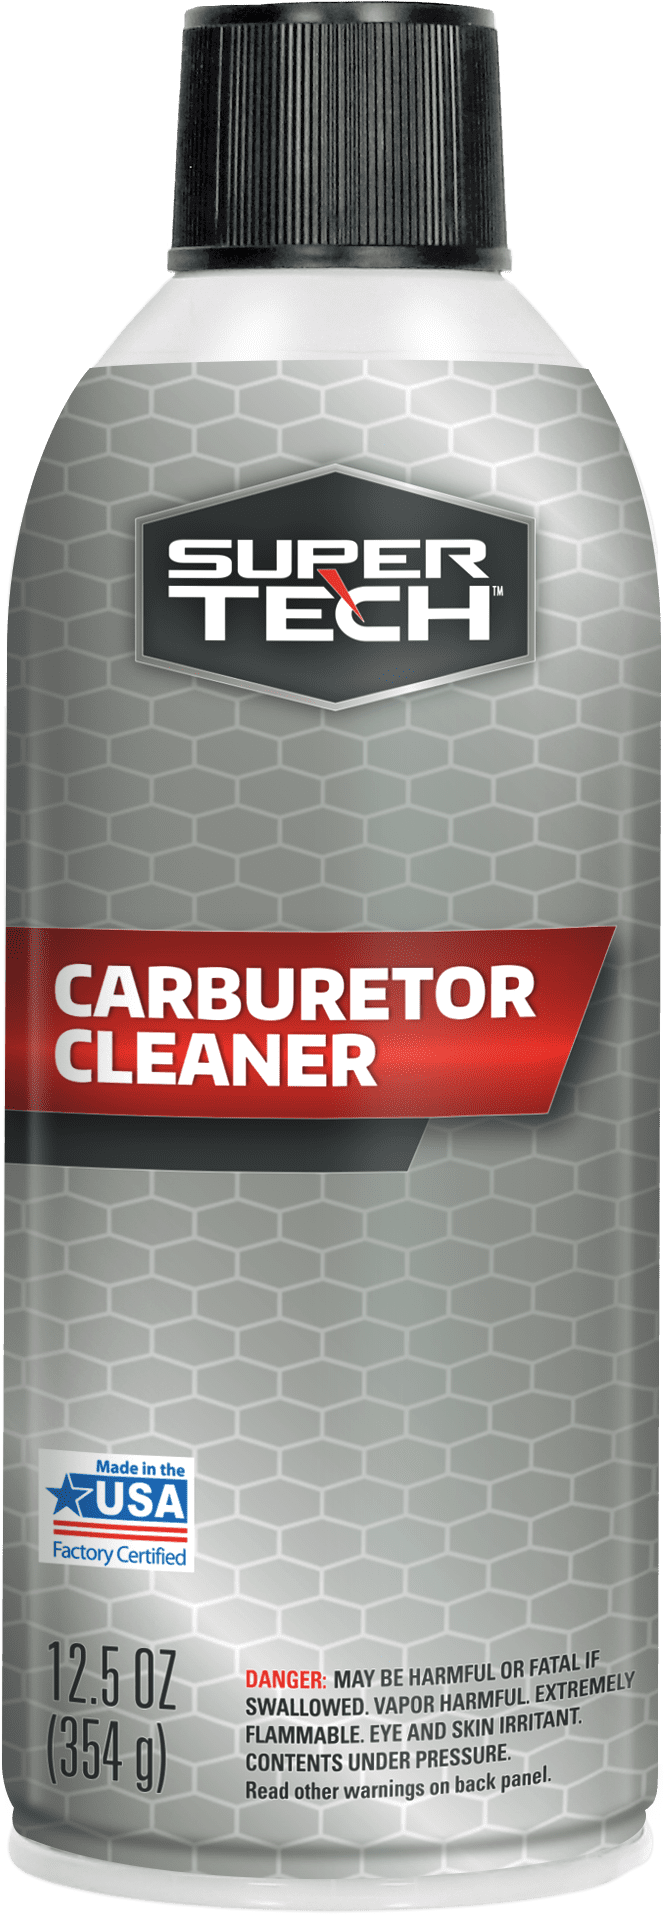 Super Tech Carburetor Cleaner — California Compliant, 12.5 oz.